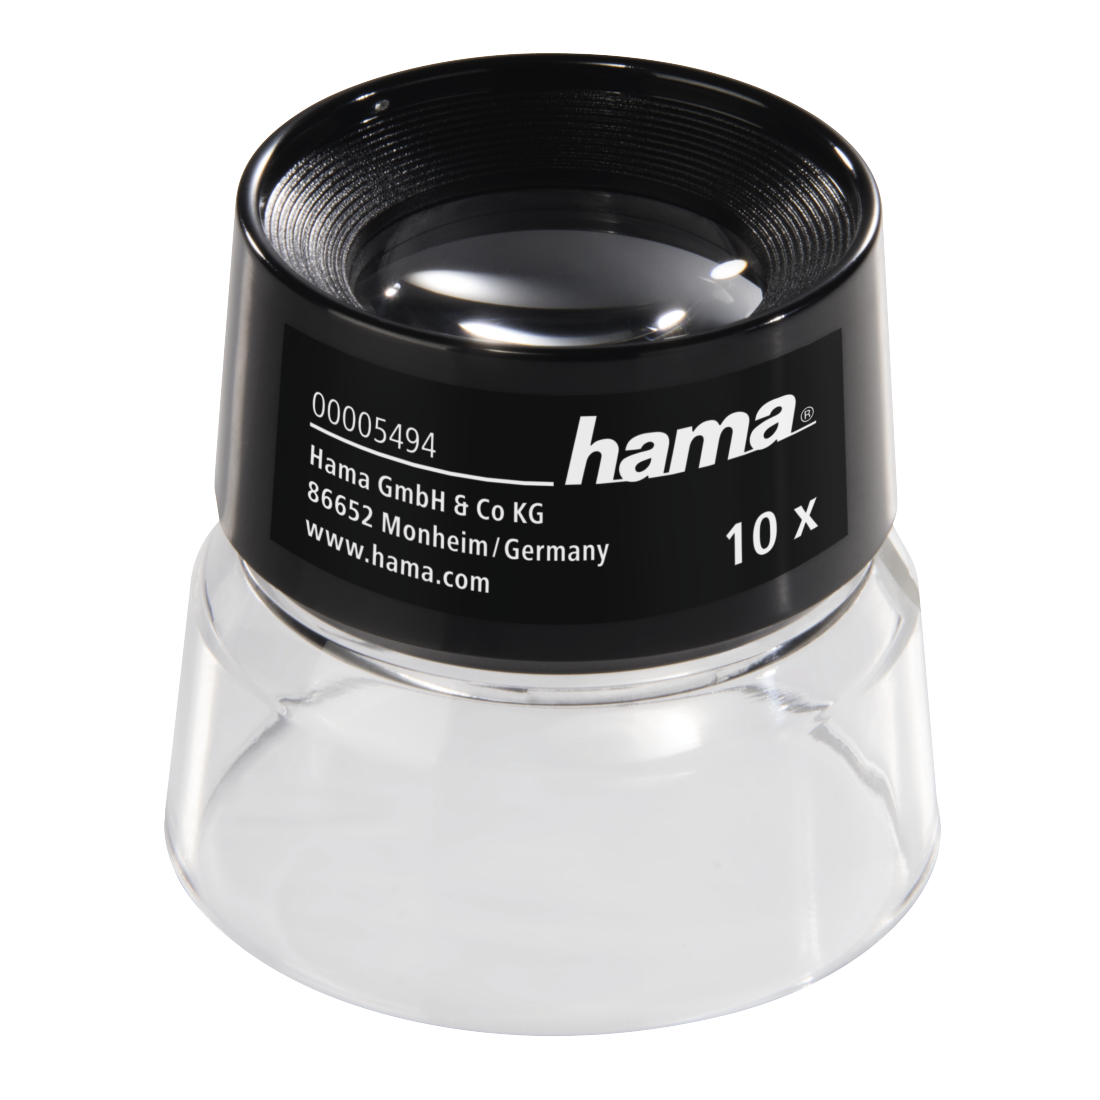 Hama Standing Magnifier 10X